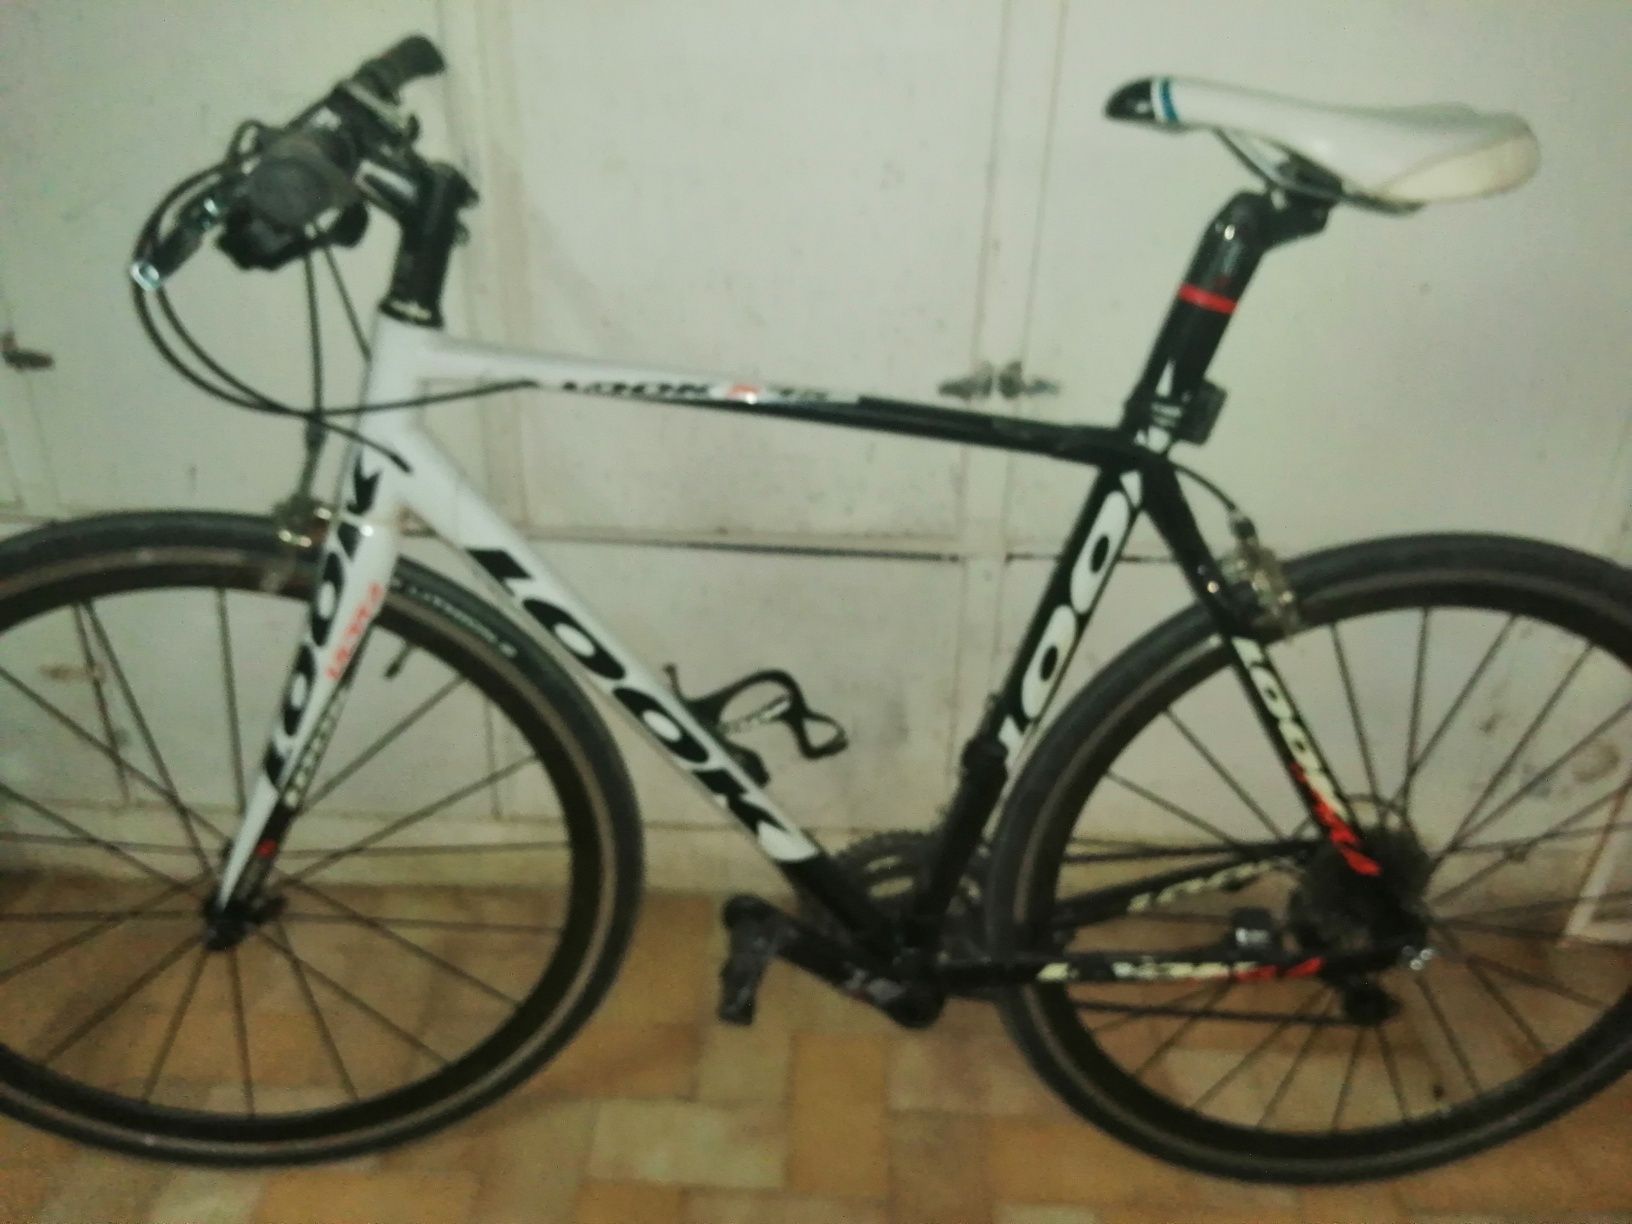 Bicicleta - carbono - Look 595 ultra- 7kg - Como nova!